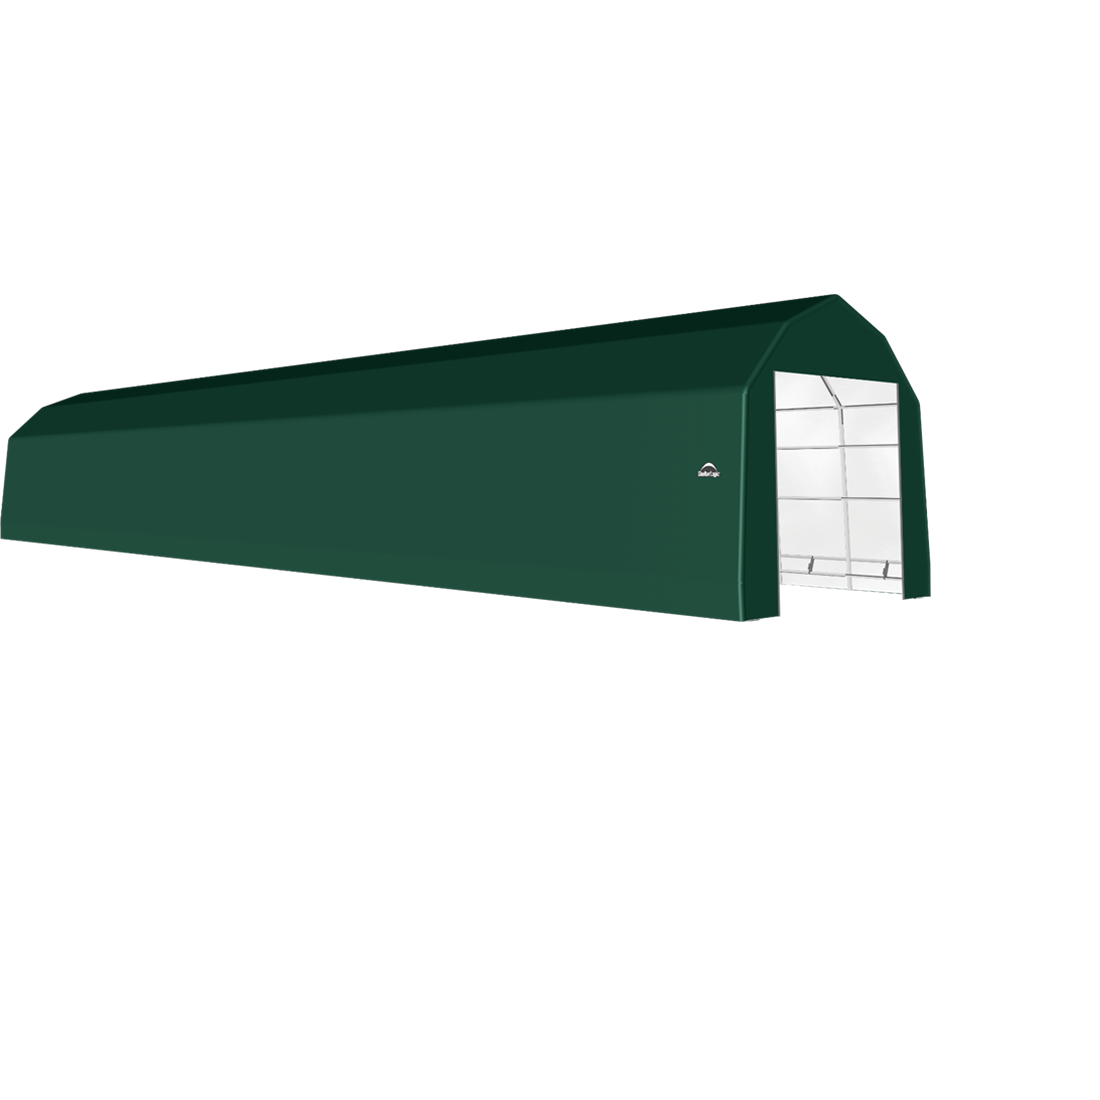 ShelterTech SP Series Barn Shelter, 15 ft. x 76 ft. x 14 ft. Heavy Duty PVC 14.5 oz. Green